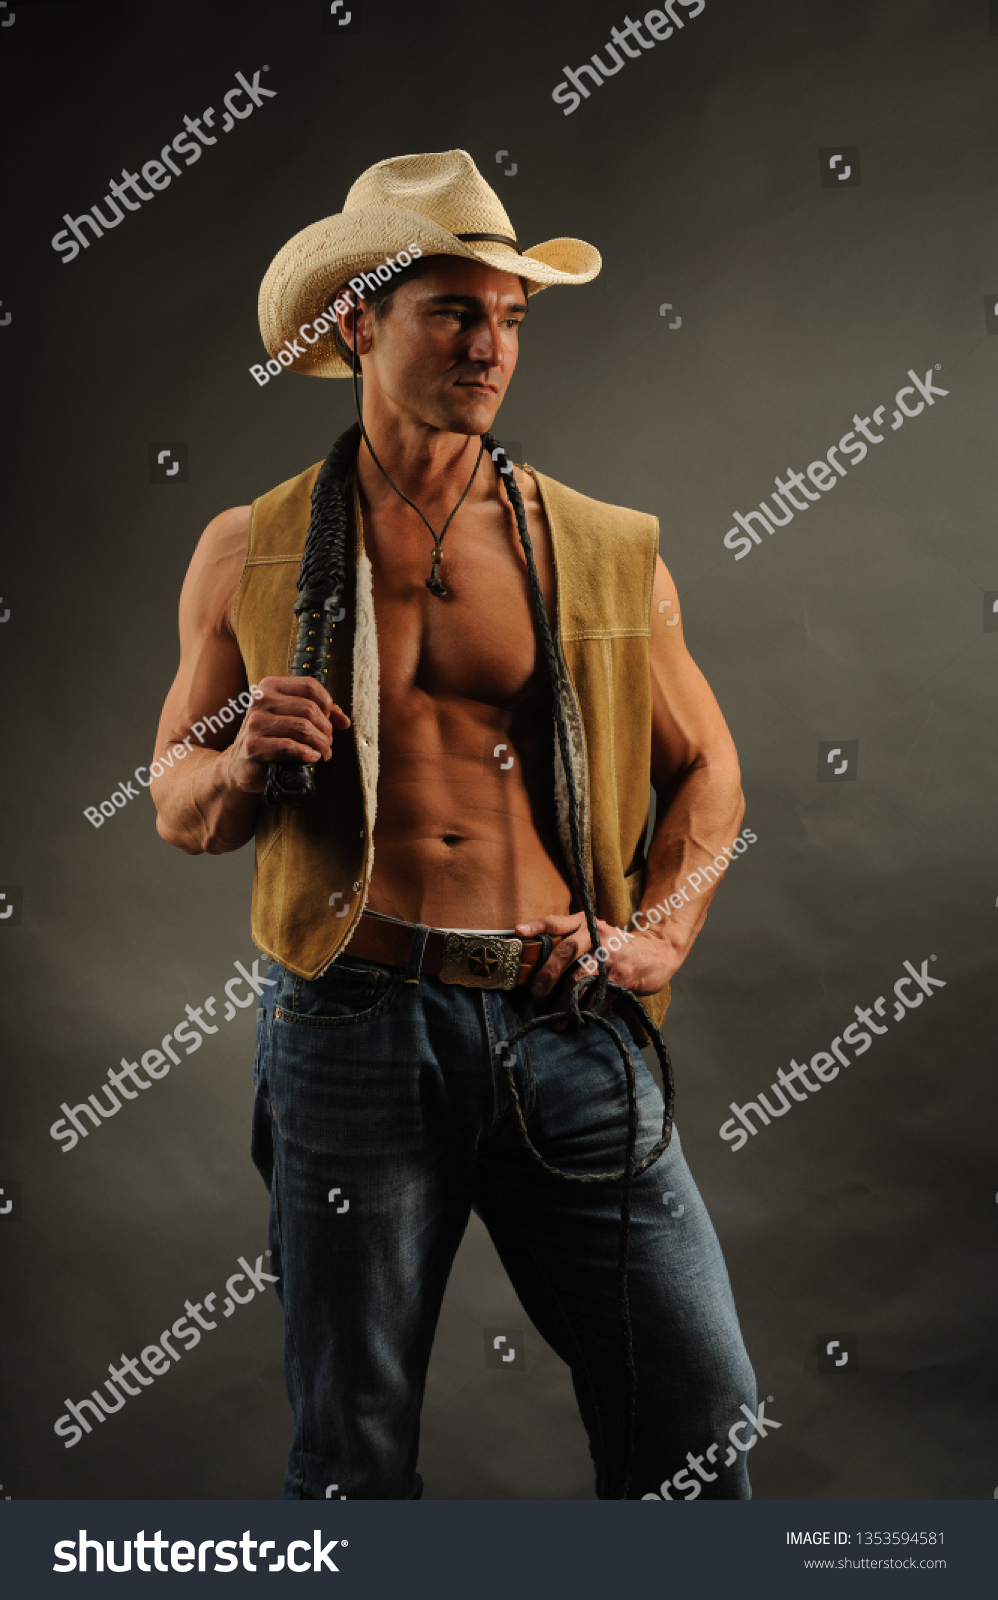 Erotic cowboy pose